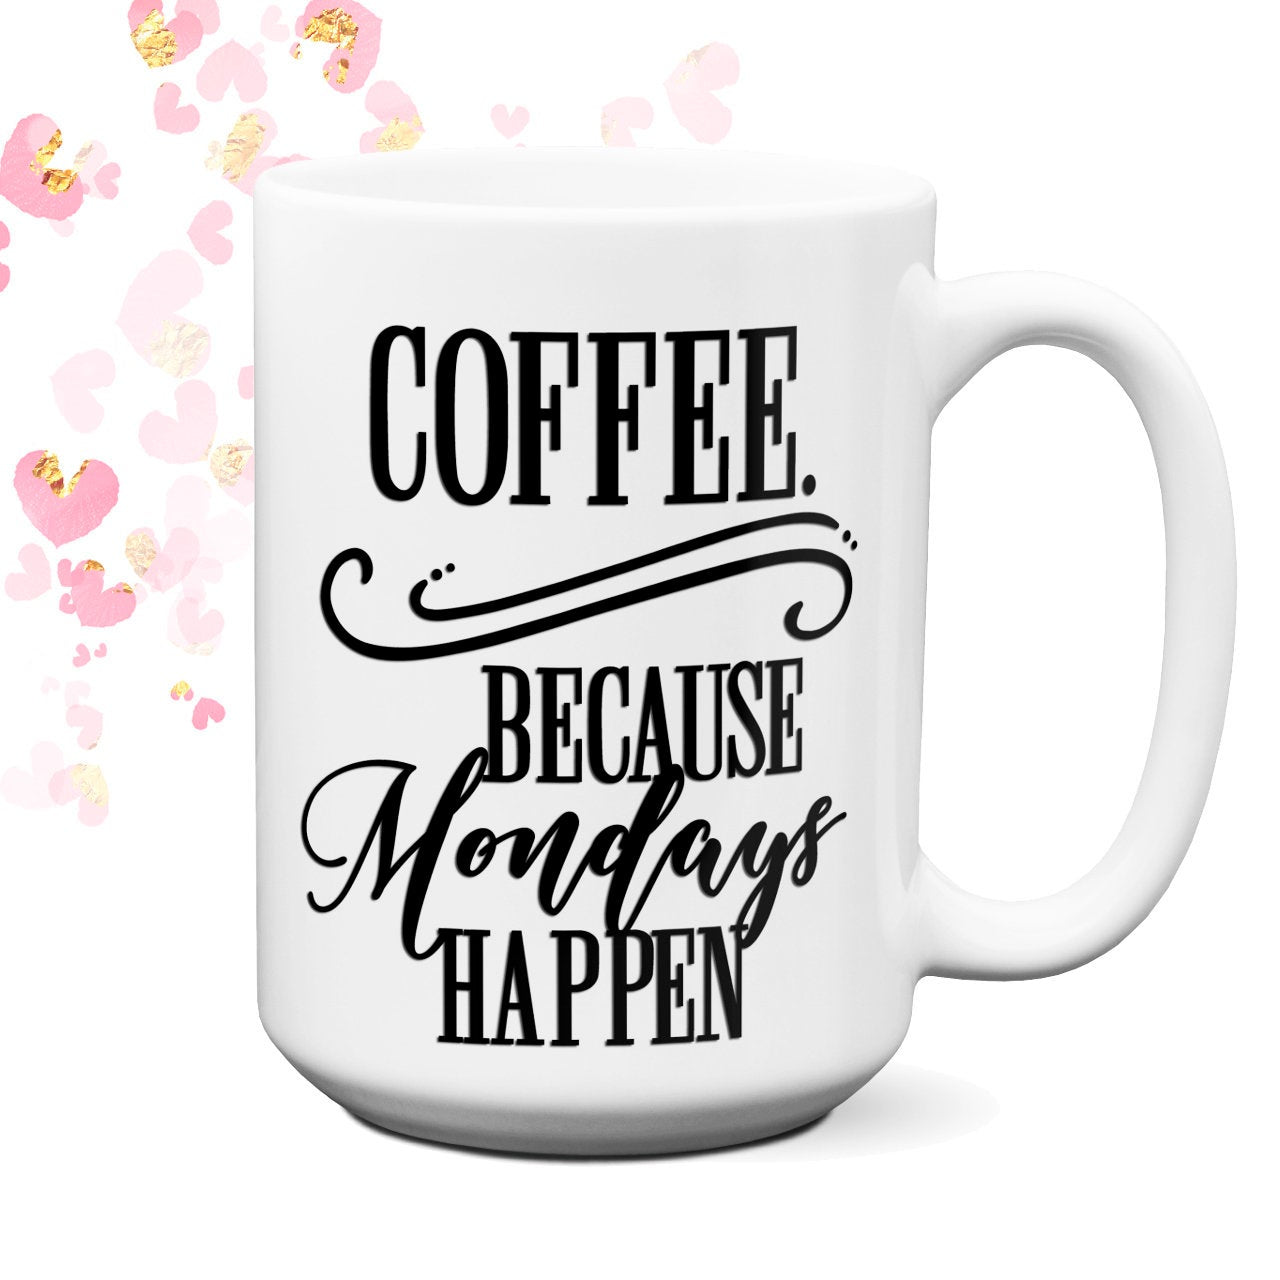 Large Funny Coffee Mugs with Sayings | Funny Coffee Cups | Coffee Love